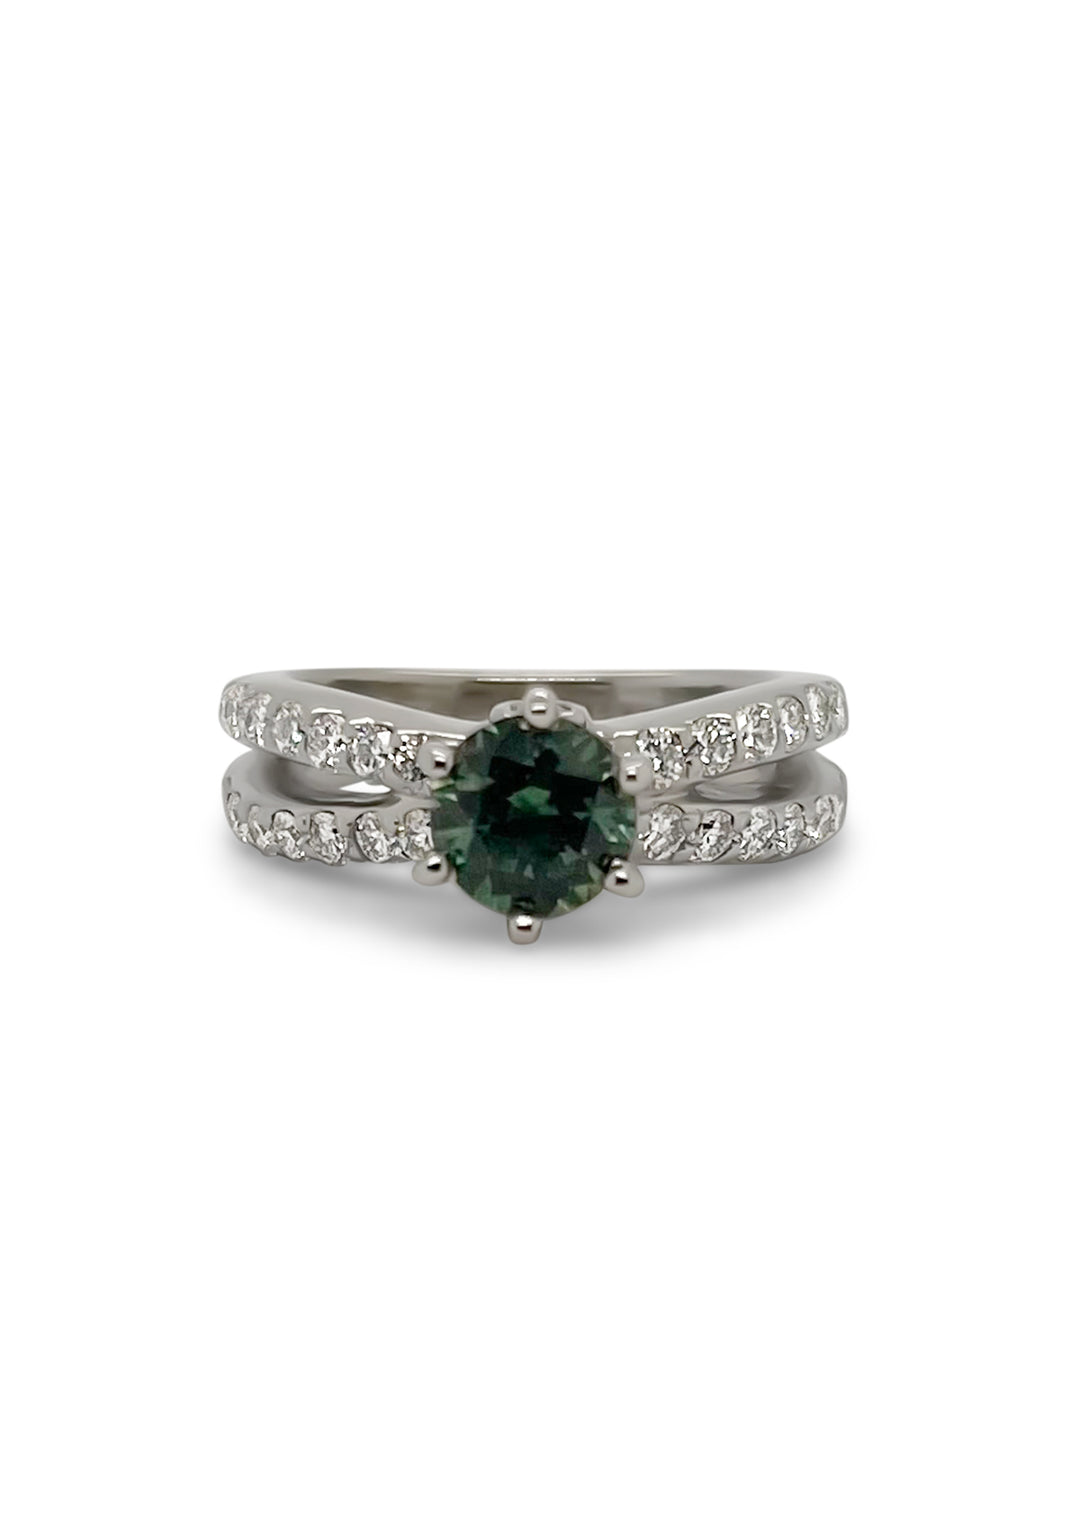 14K White Gold .99 Carat Montana Green Sapphire And Diamond Ring